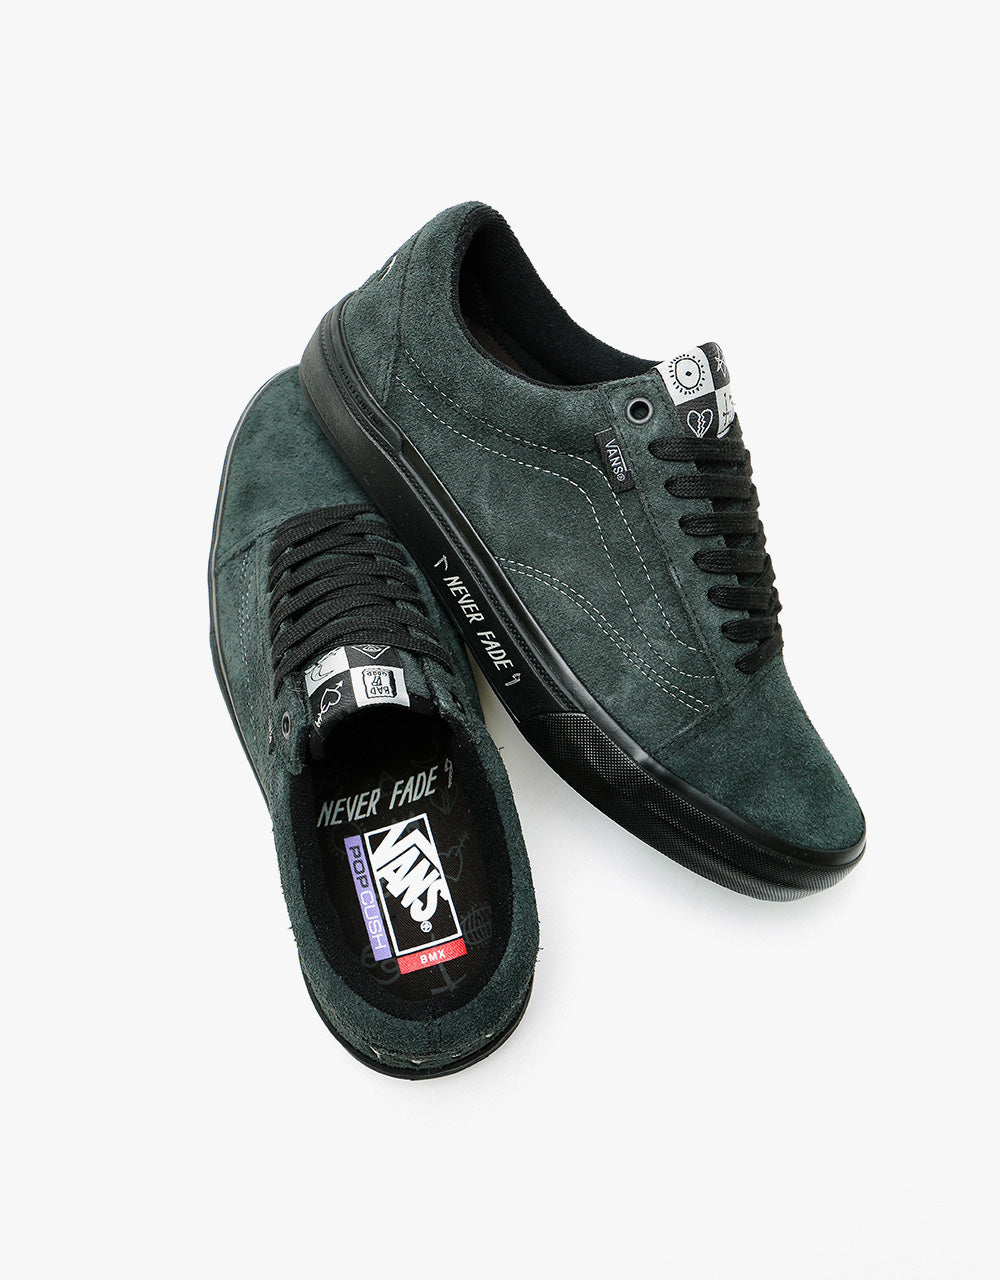 Vans BMX Old Skool Shoes - (Cult) Black/Grey